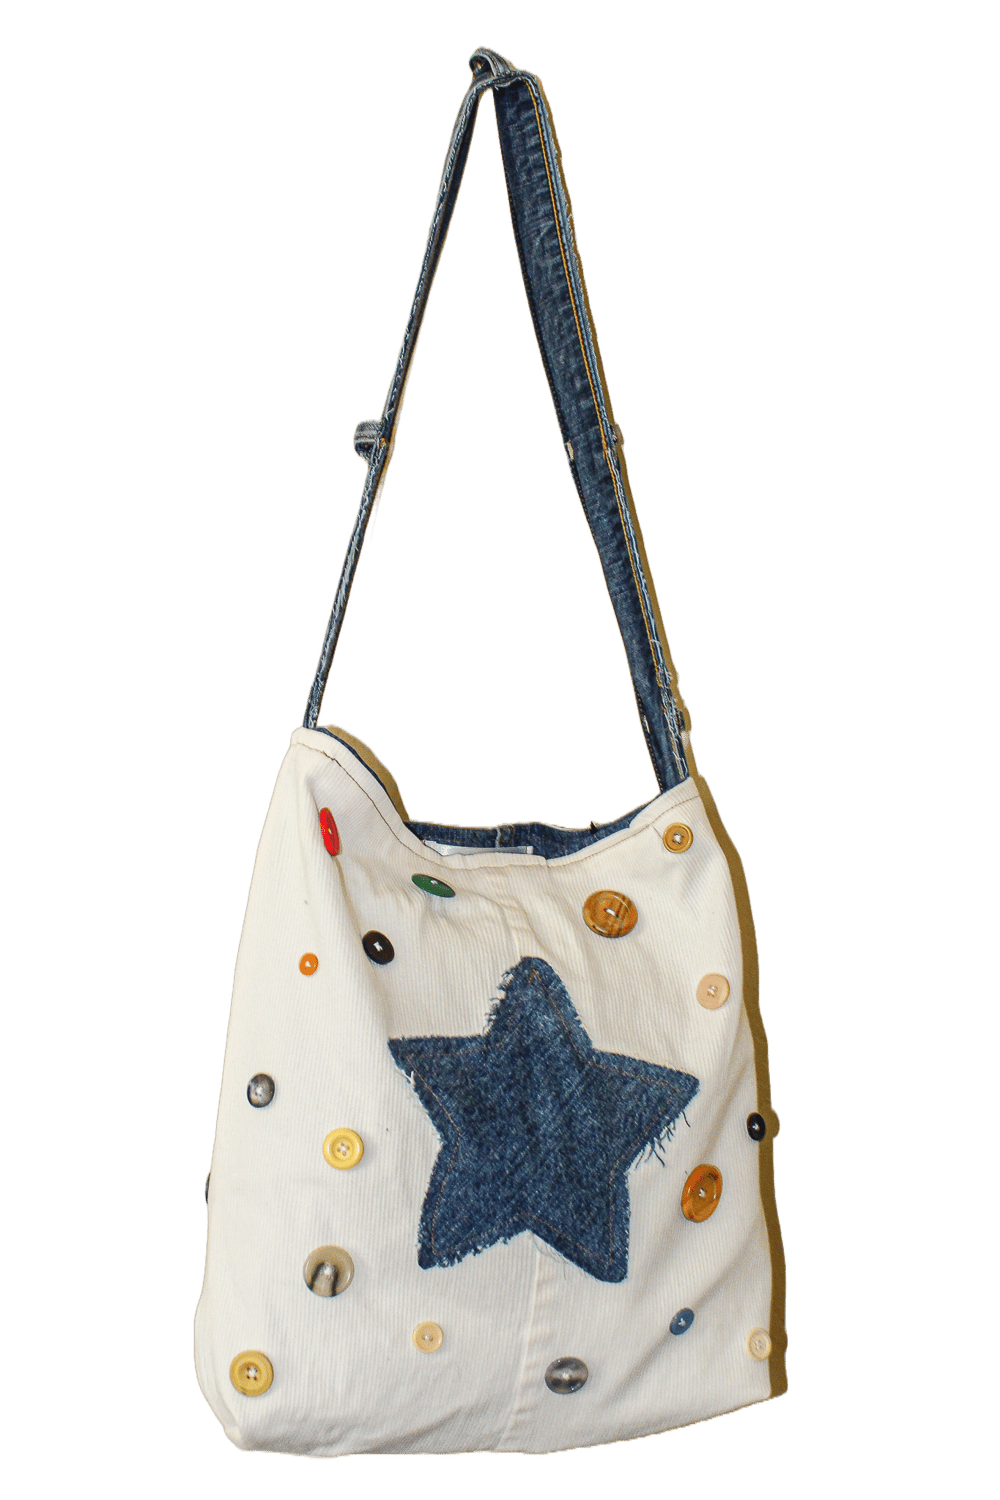 Starlight Bag #4: Button Baby Bag